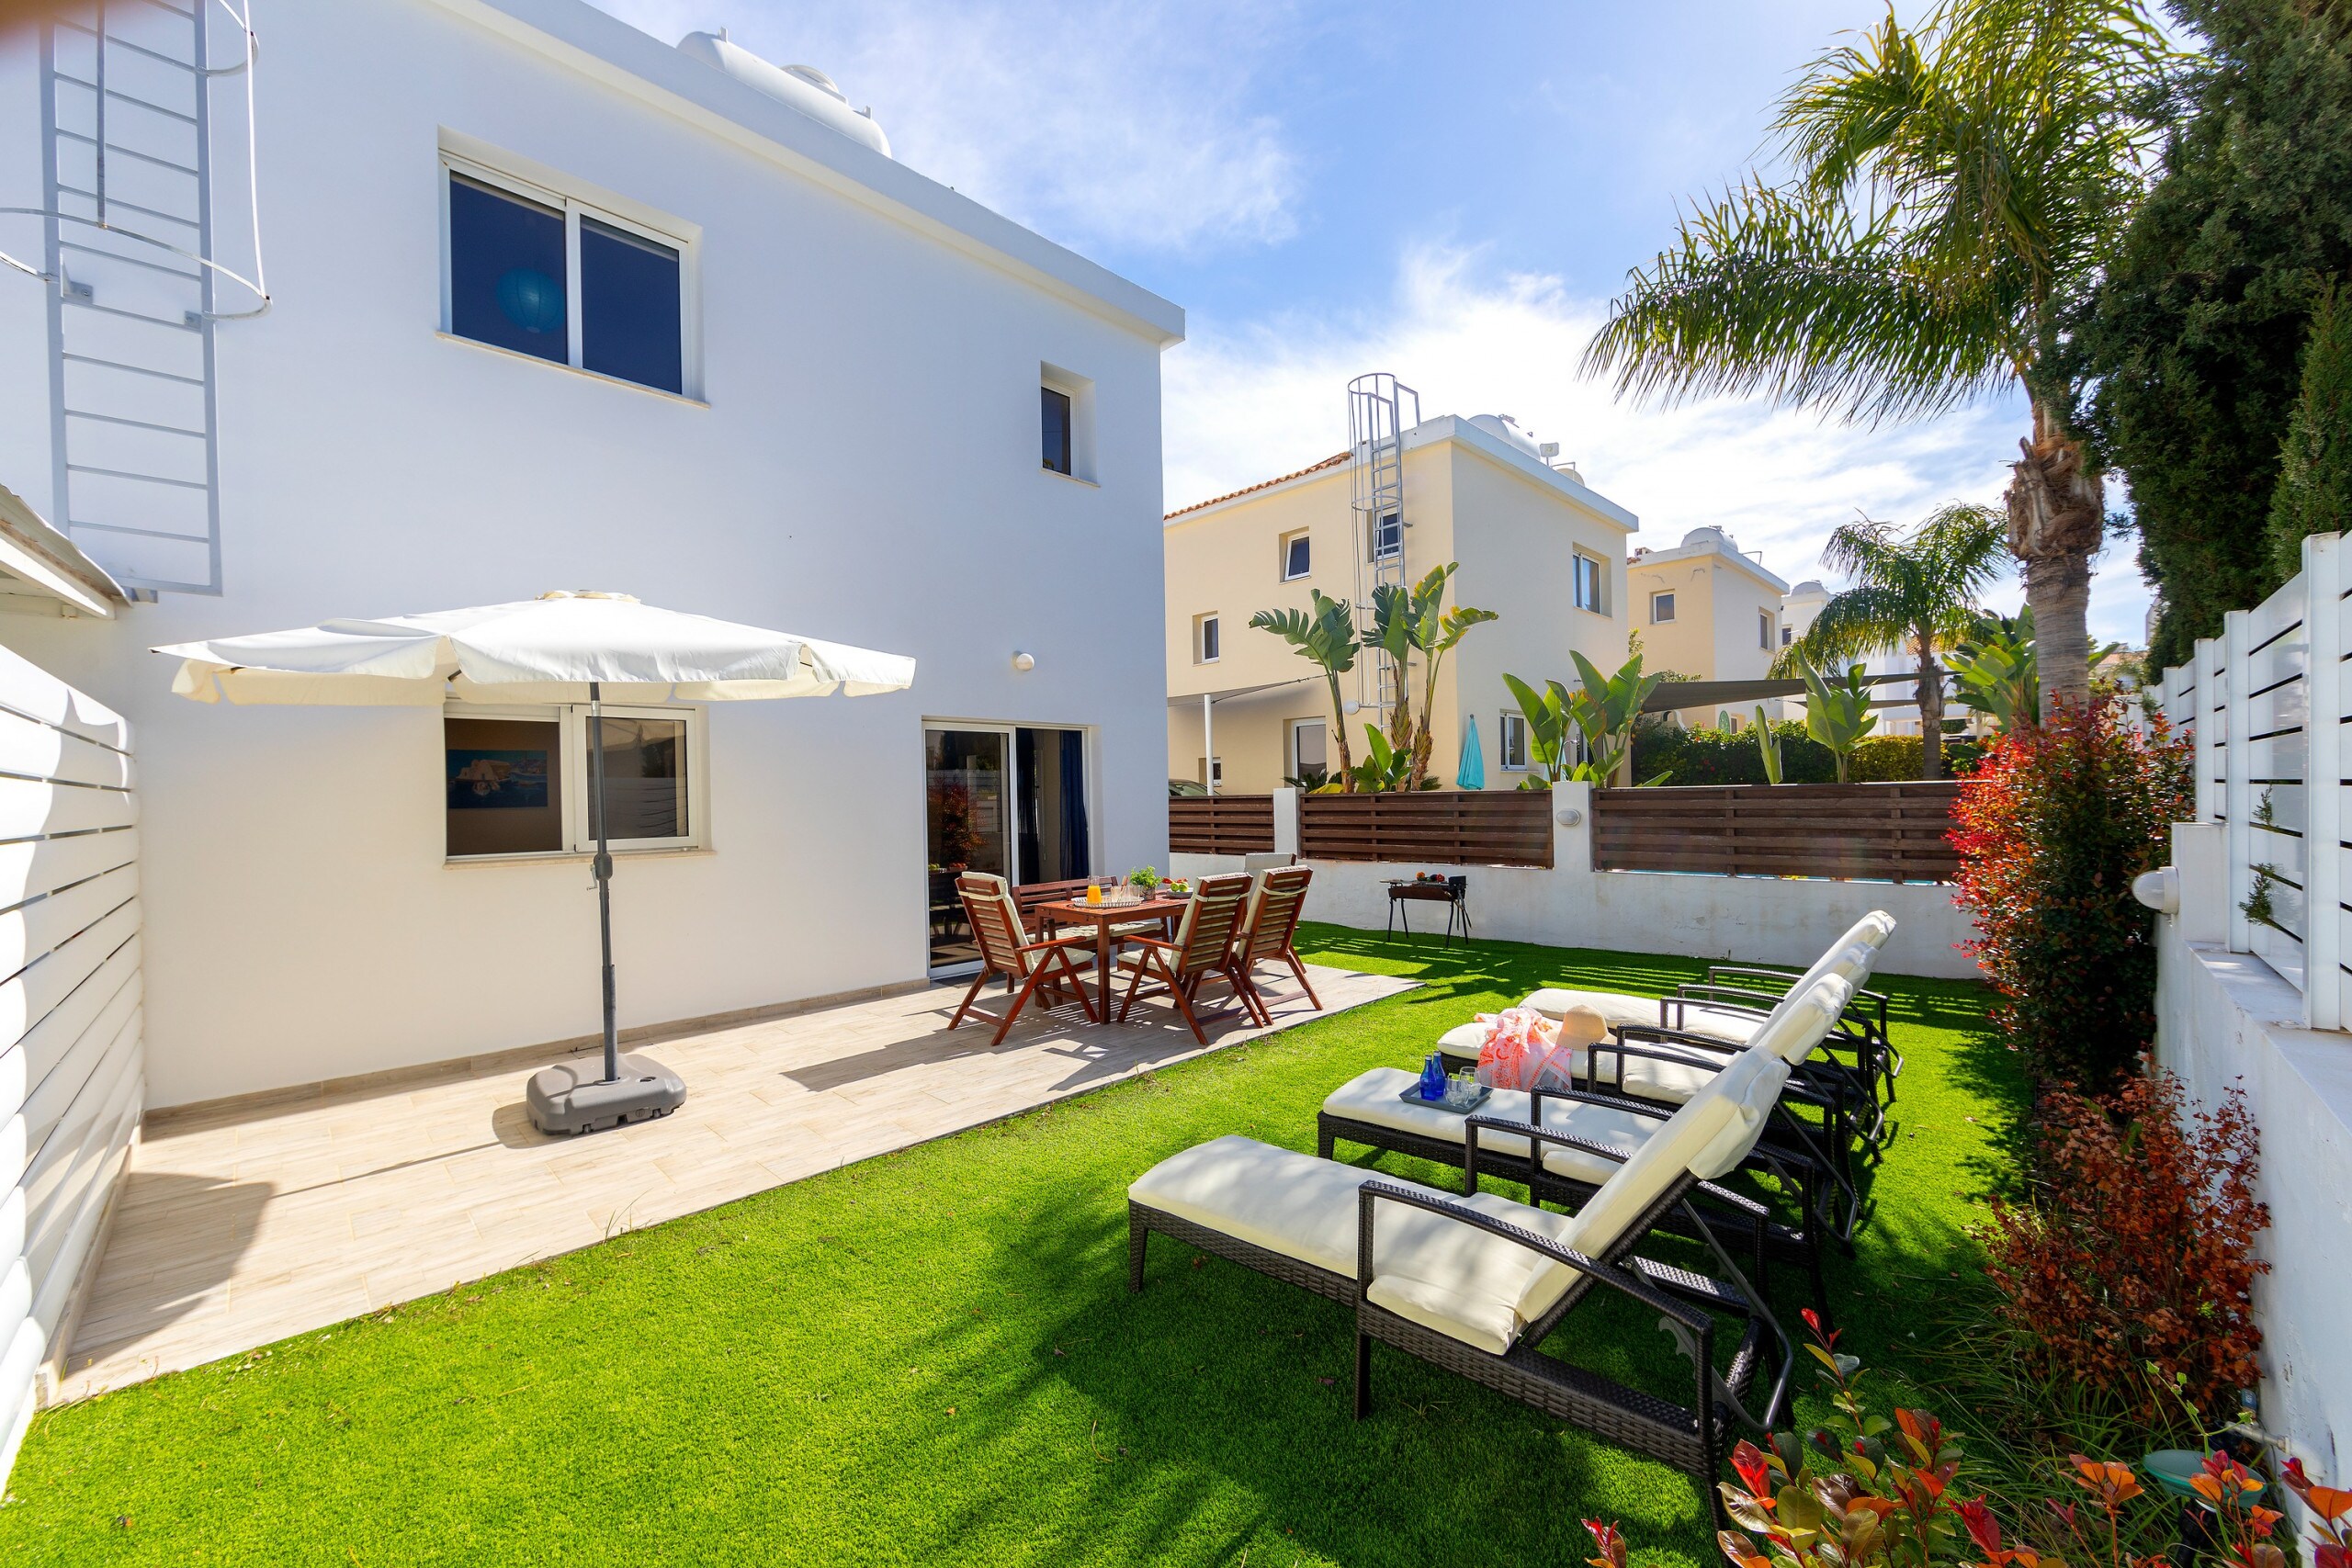 Property Image 2 - Tropical Beach Themed Villa with Spacious Lounge Garden